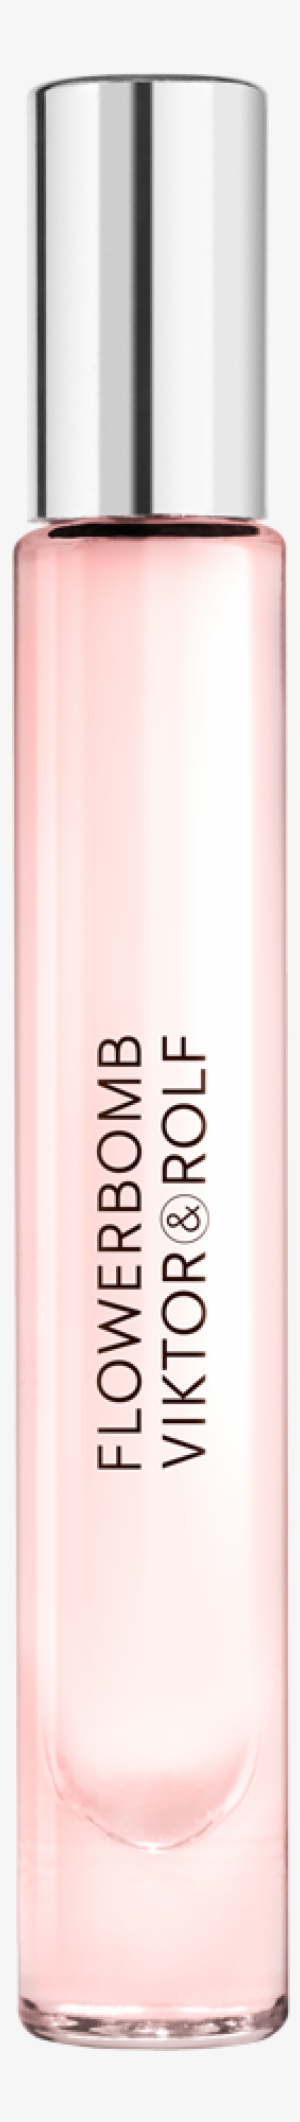 Flowerbomb Travel Spray - Perfume